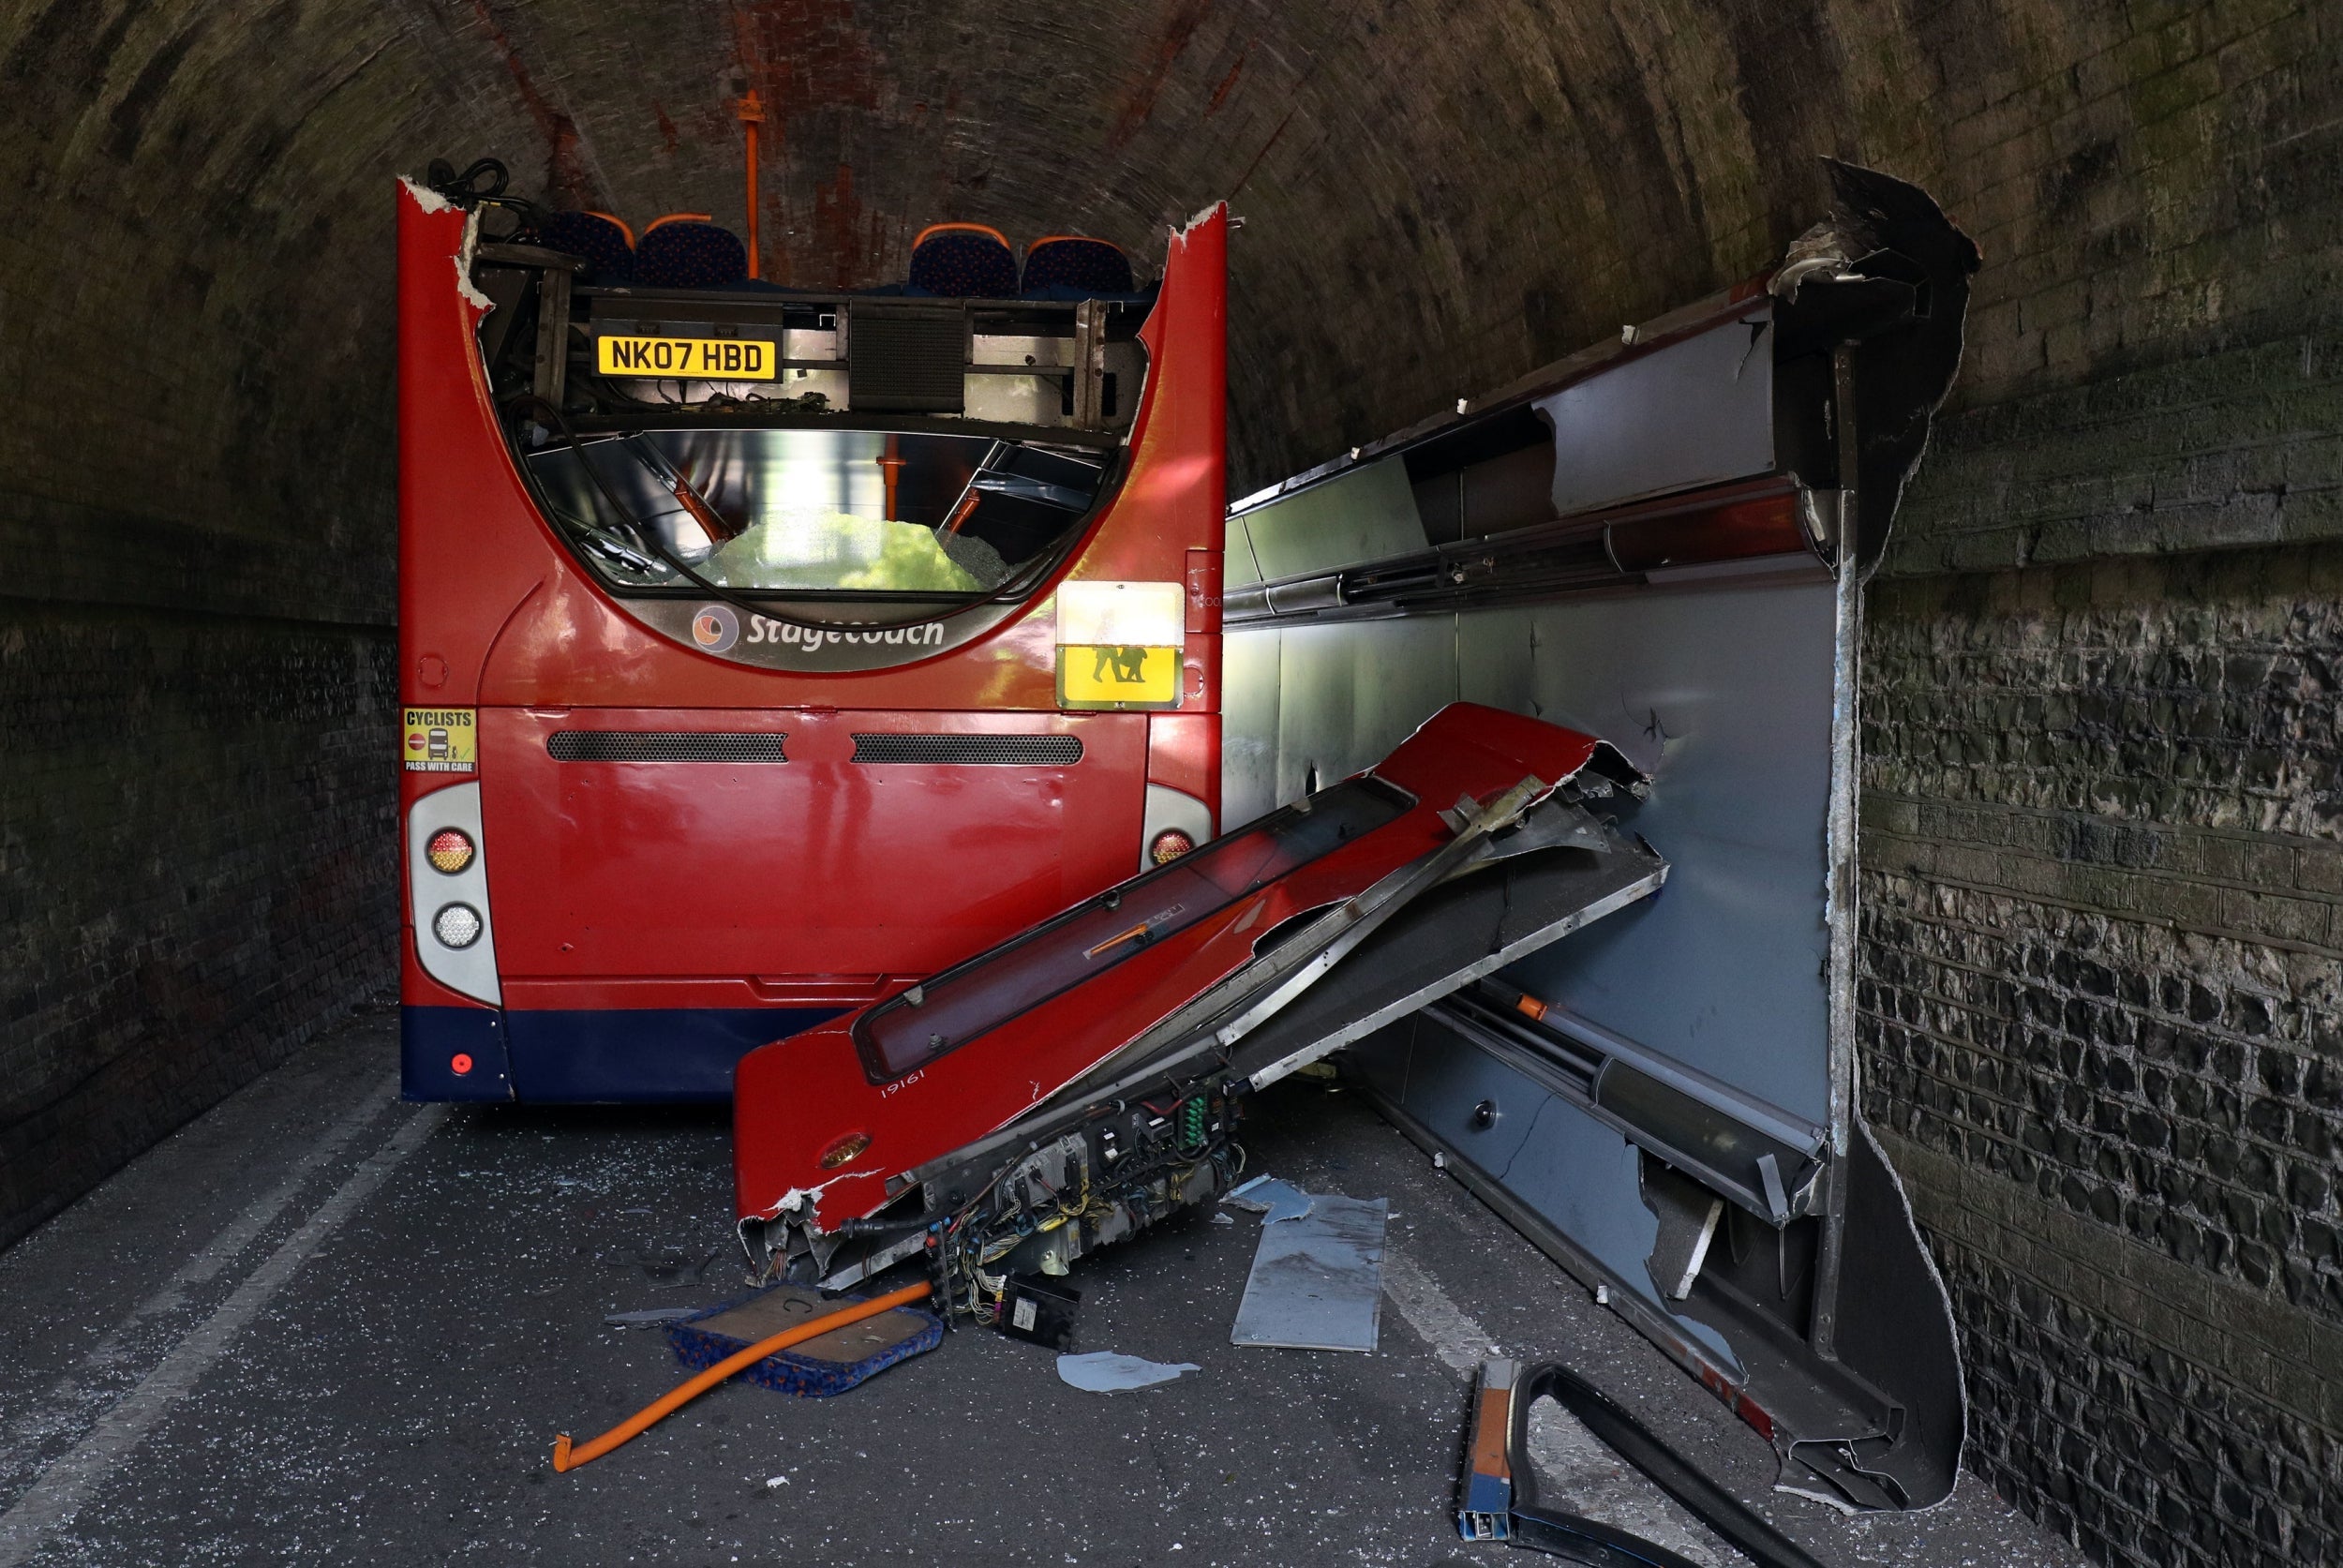 One schoolgirl described the bus as “powering through the tunnel”.